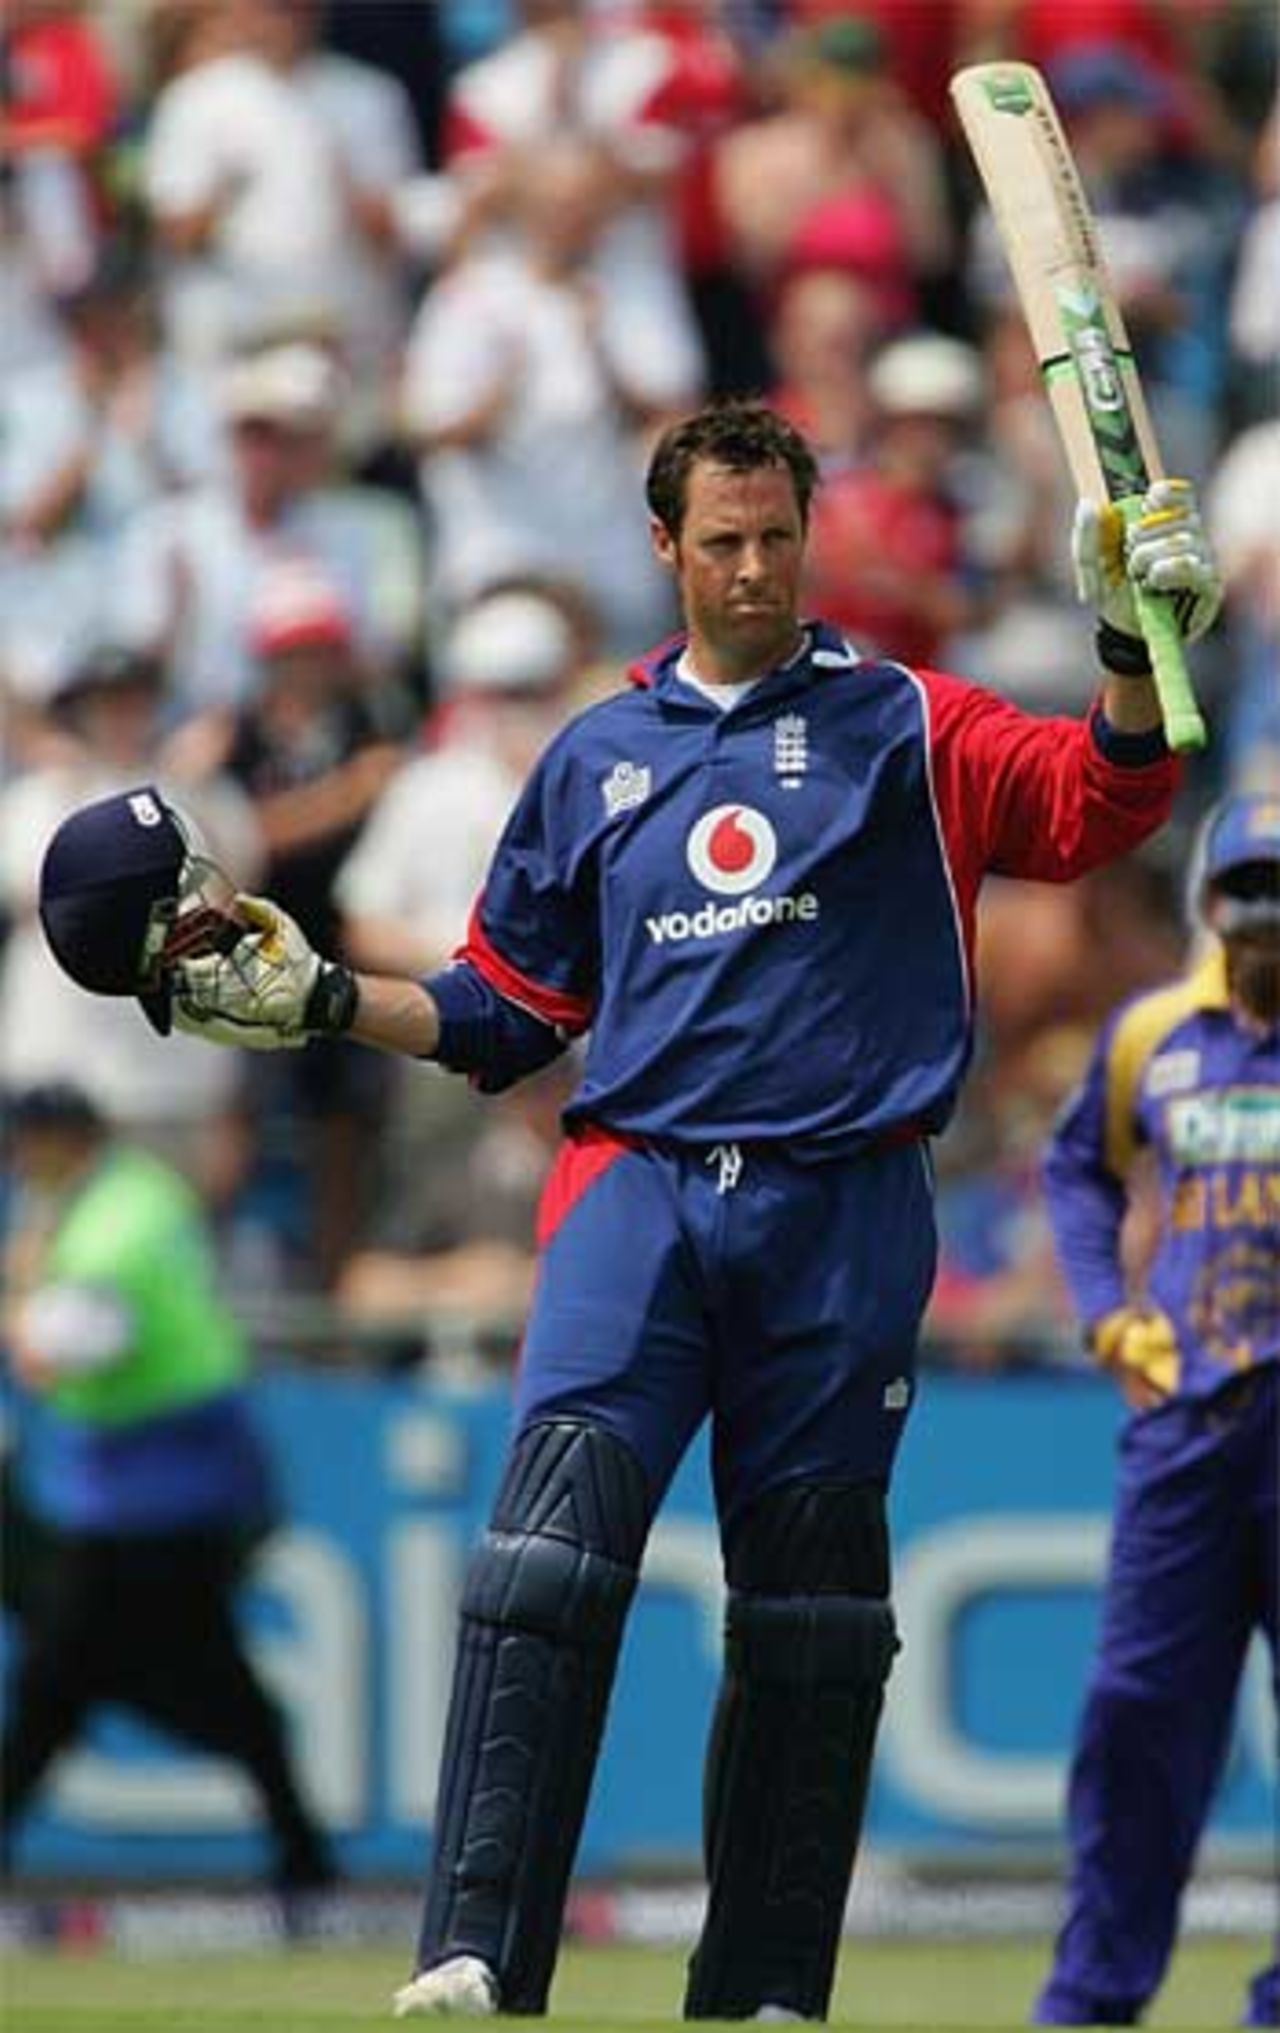 Marcus Trescothick celebrates the first ODI century for England for nearly a year, England v Sri Lanka, 5th ODI, Headingley, July 1, 2006